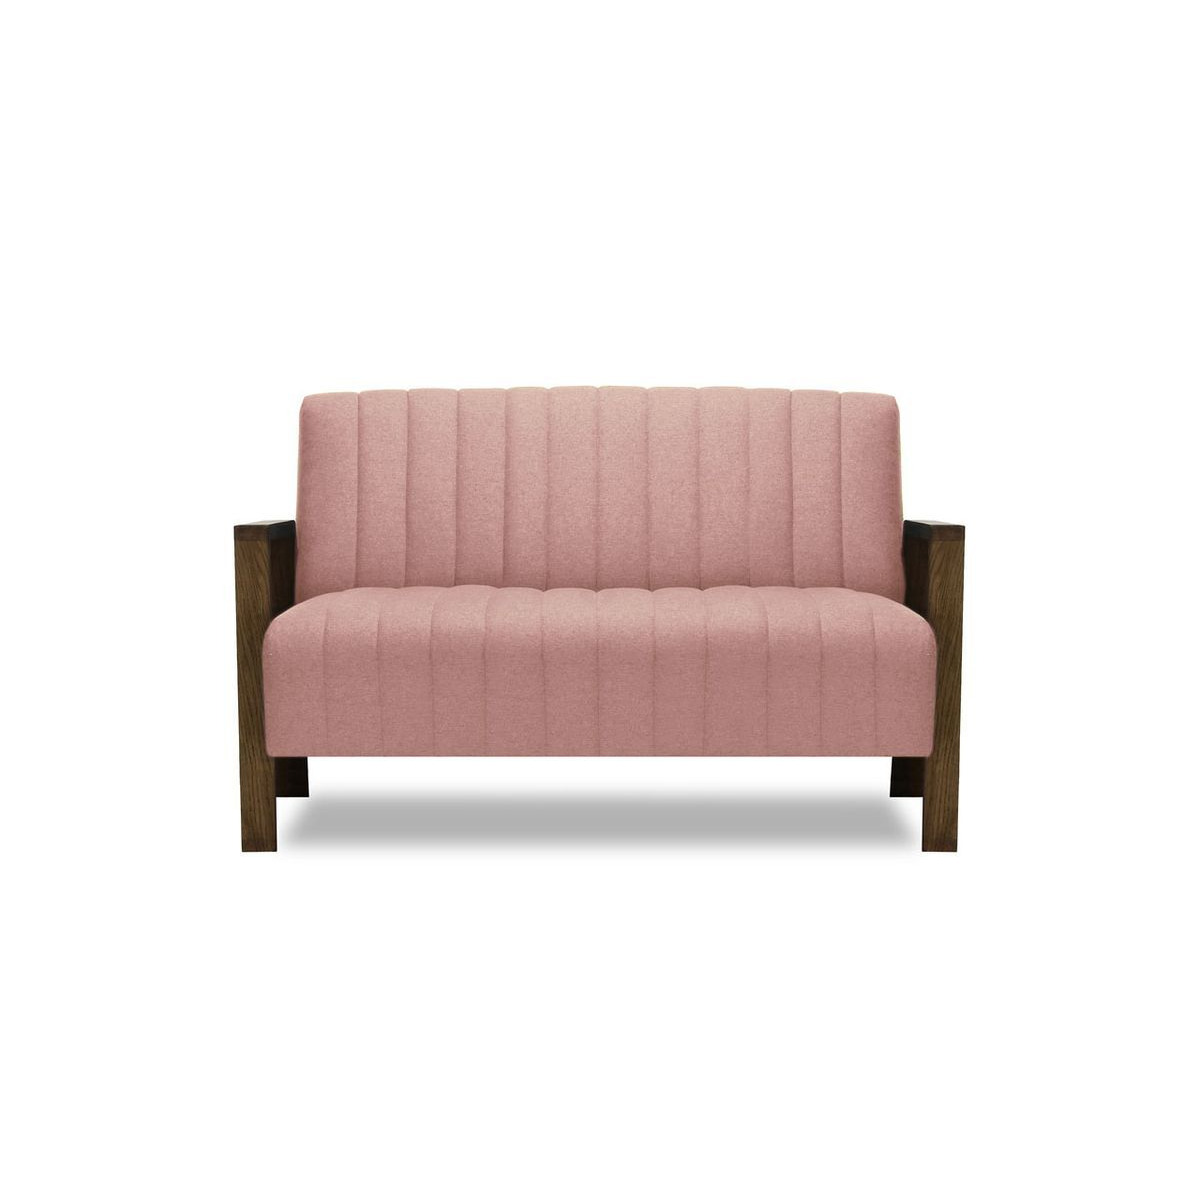 Cooper 2 Seater Sofa, pink - image 1